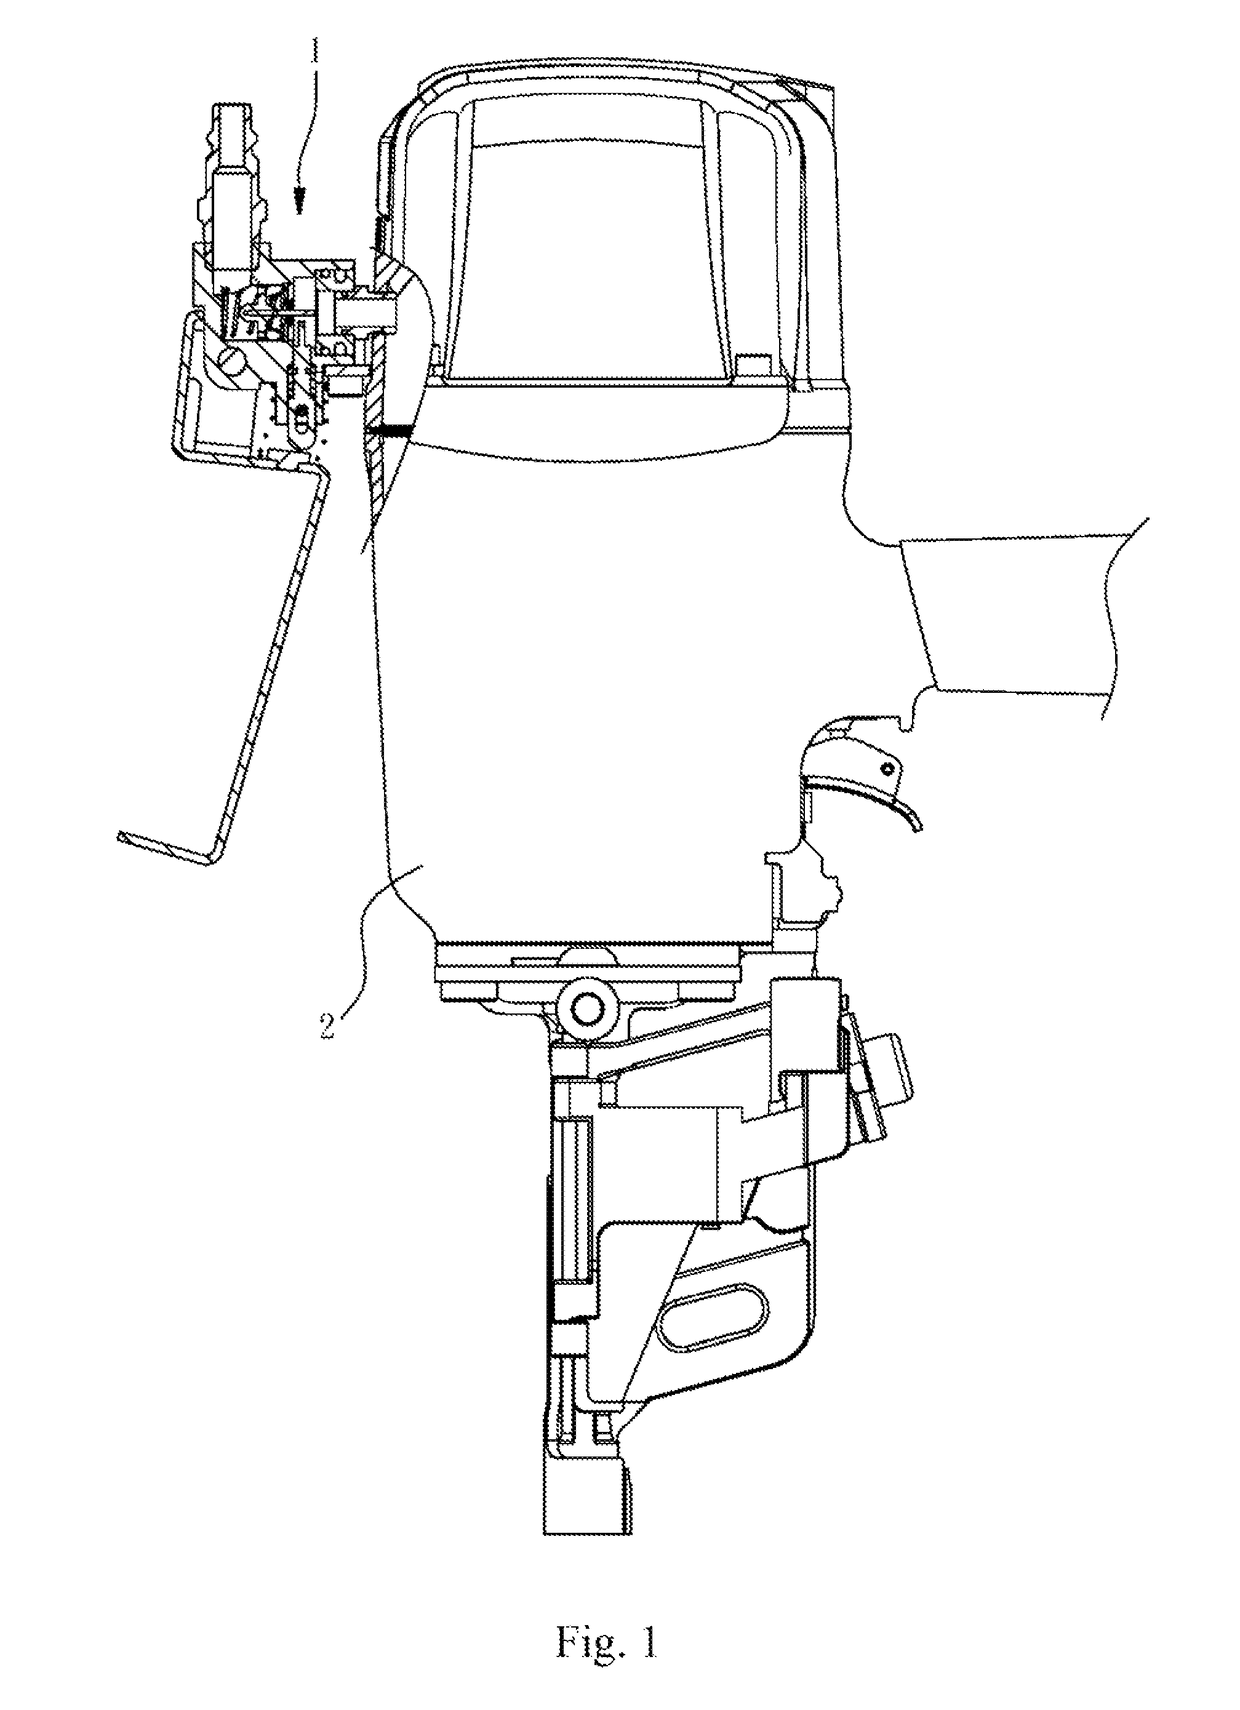 Air source controlling device for a pneumatic nail-gun